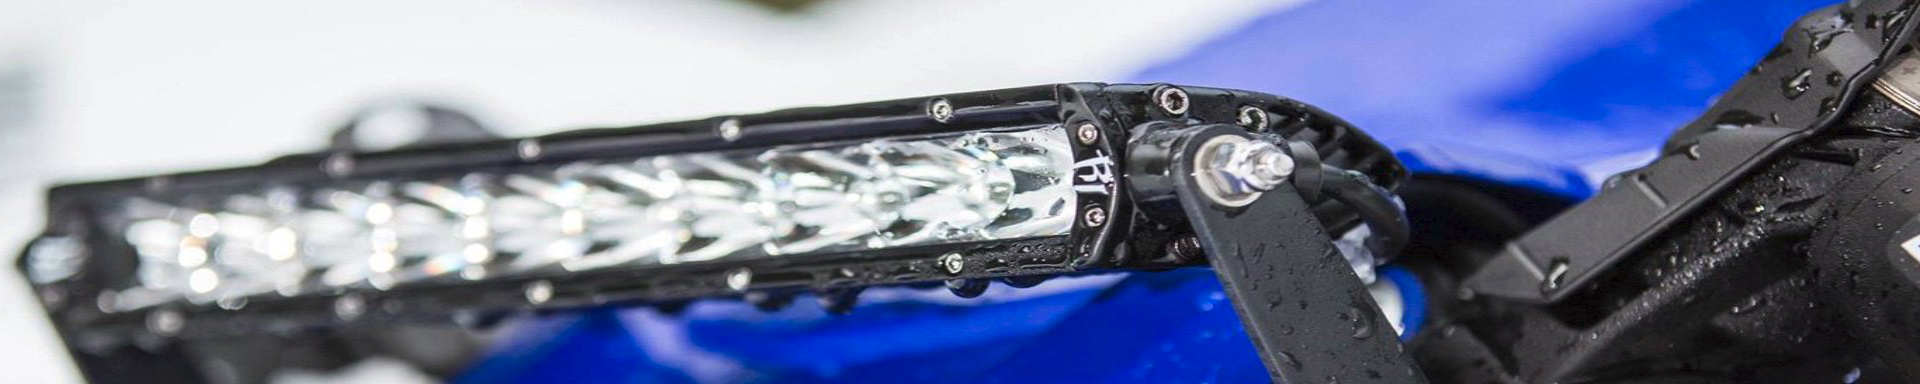 LED Light Bars | MunroPowersports.com | Munro Industries mp-100803060206